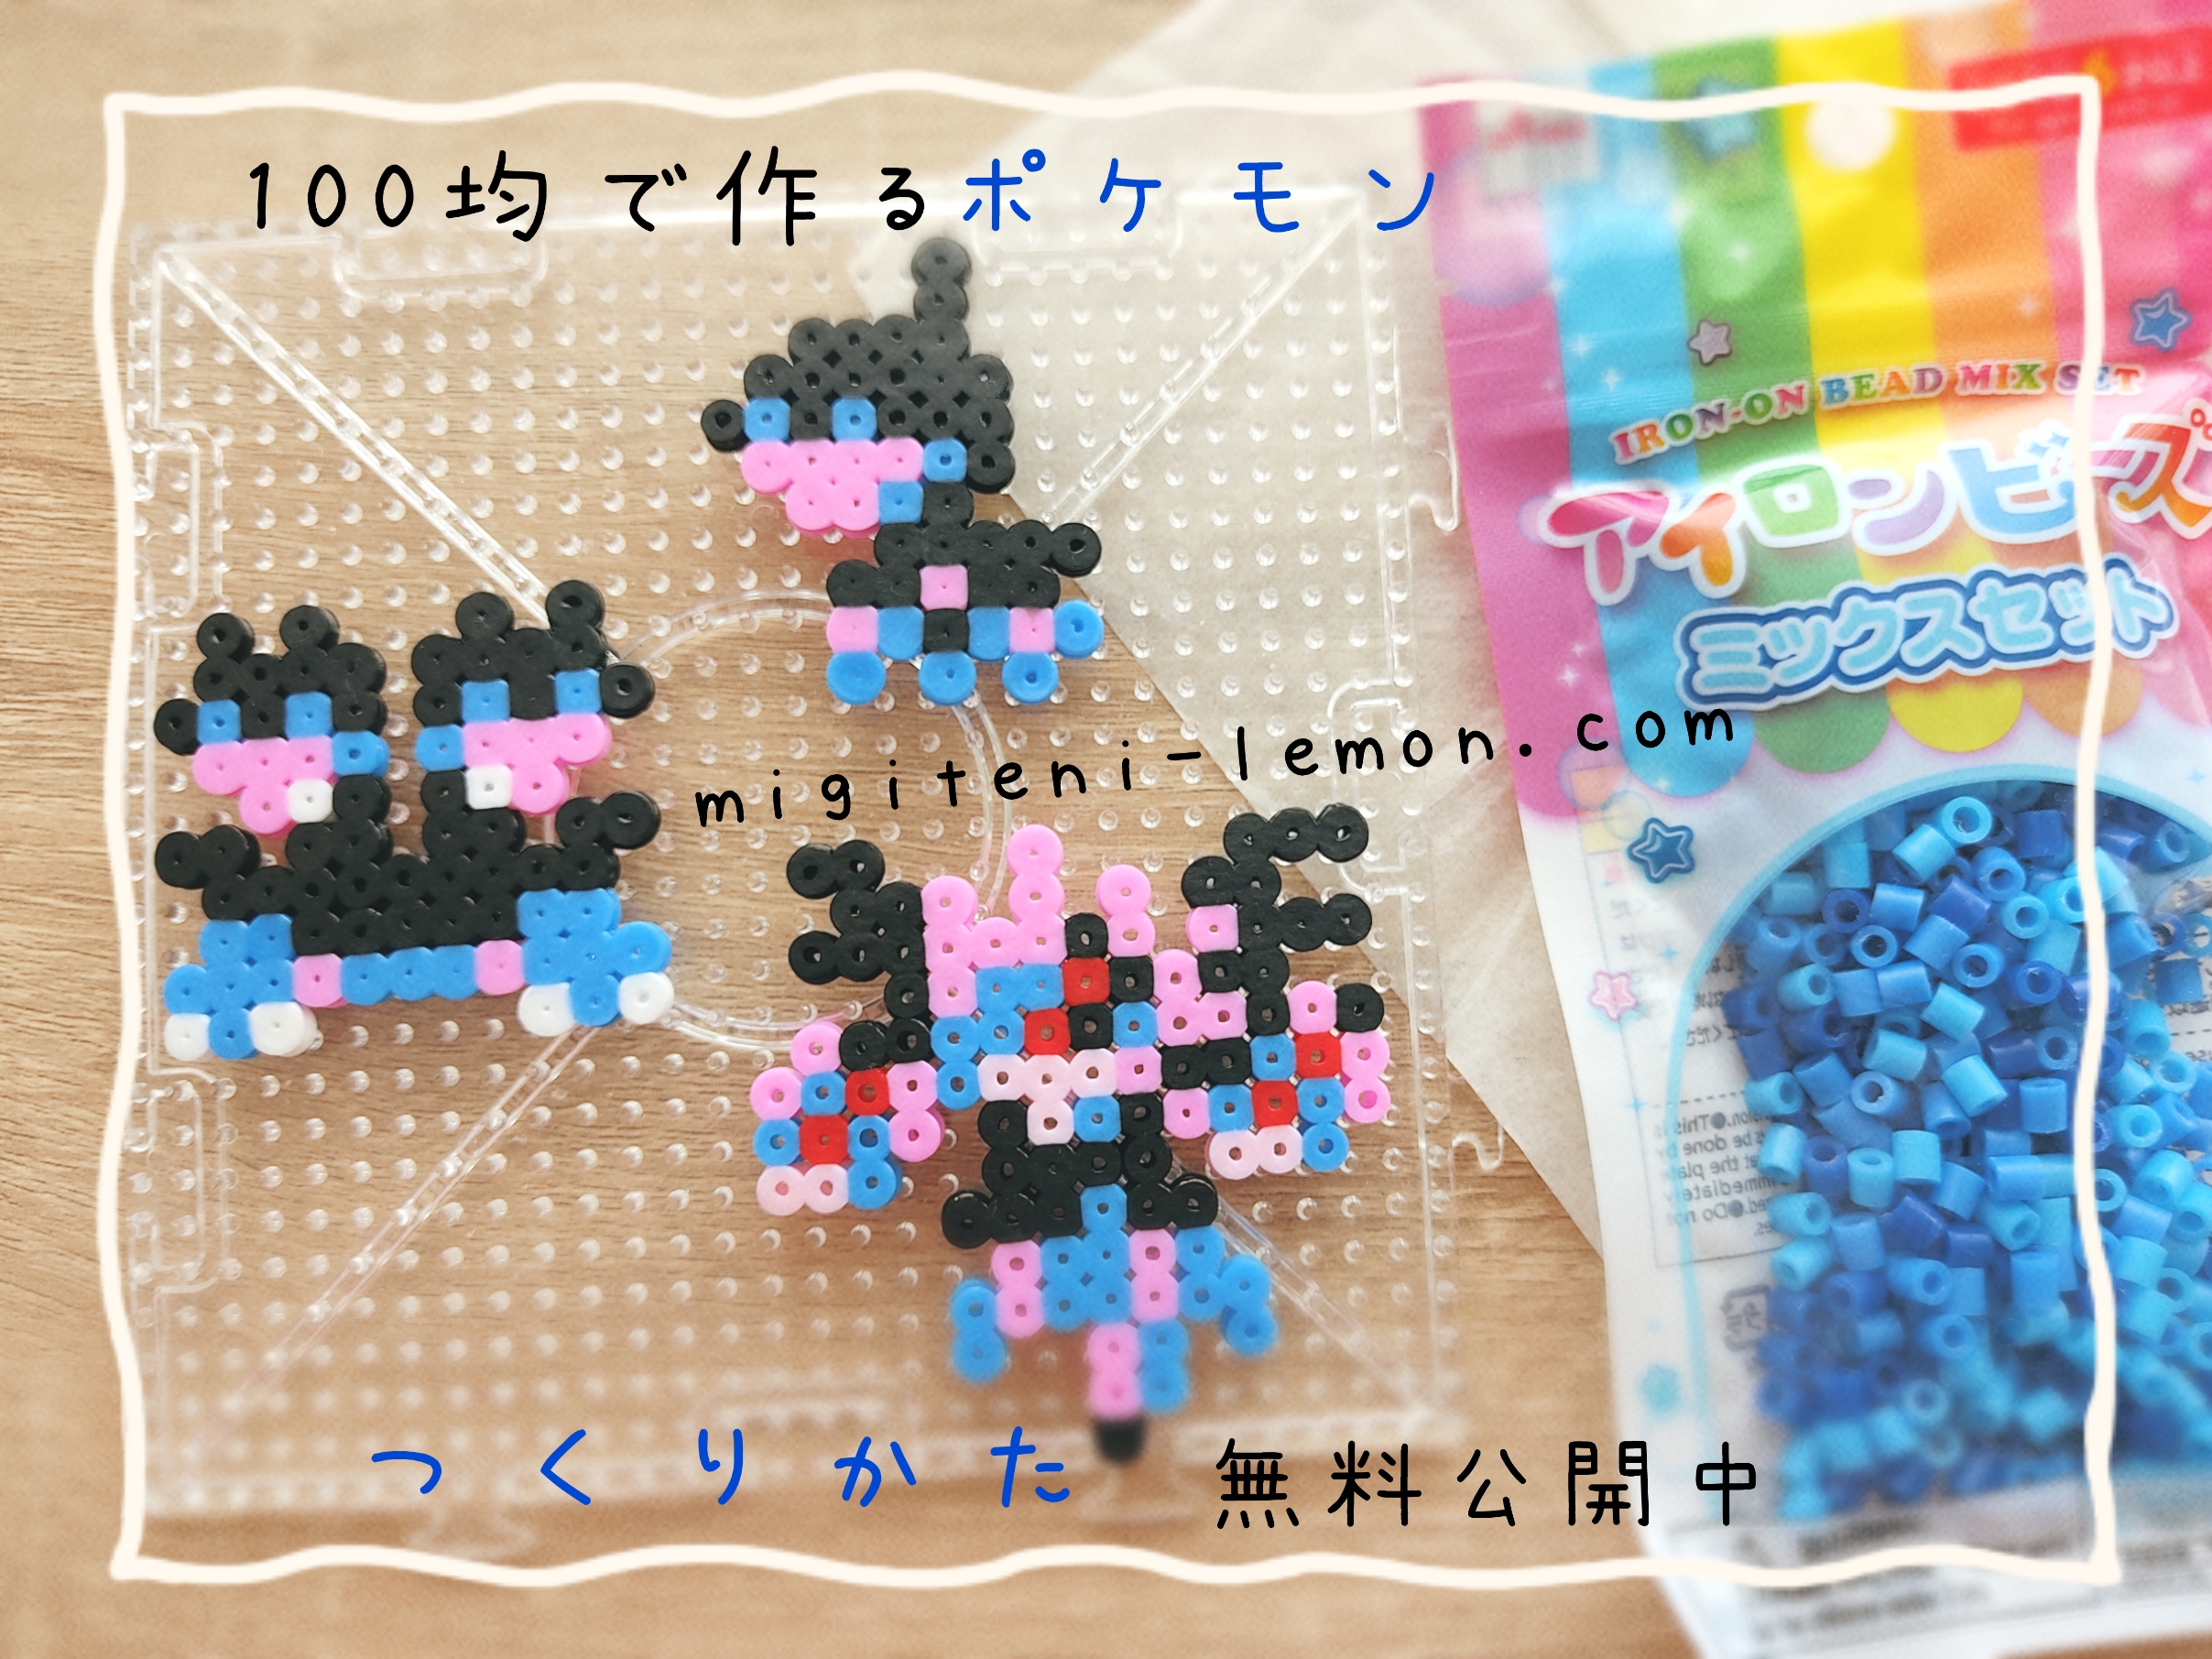 monozu-deino-dihead-zweilous-sazandora-hydreigon-pokemon-go-handmade-iron-beads-daiso-100kin-small-square-free-zuan-kids-black-pink-blue-color